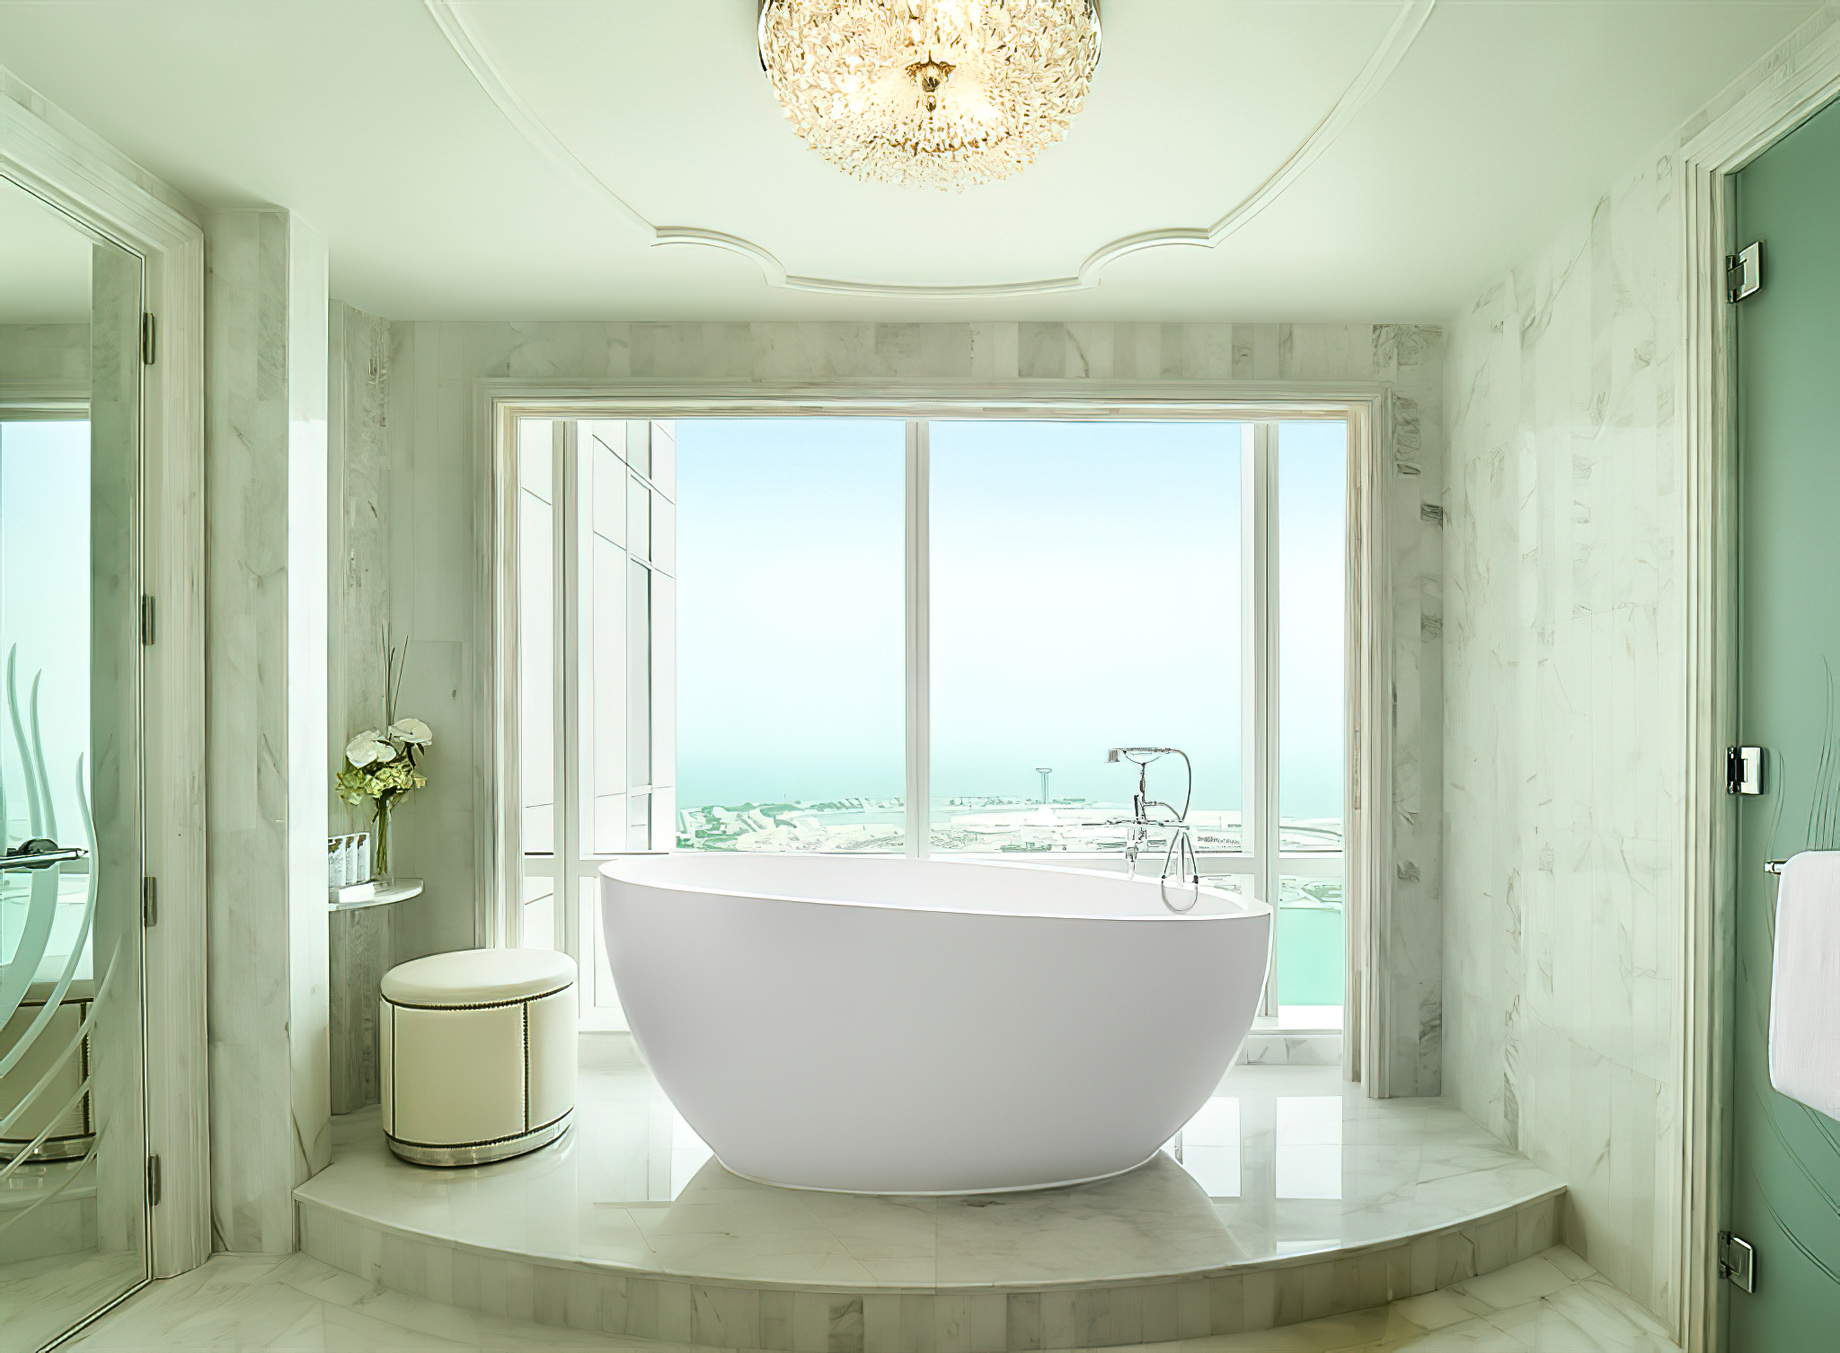 The St. Regis Abu Dhabi Hotel – Abu Dhabi, United Arab Emirates – Grand Deluxe Suite Bathroom Tub